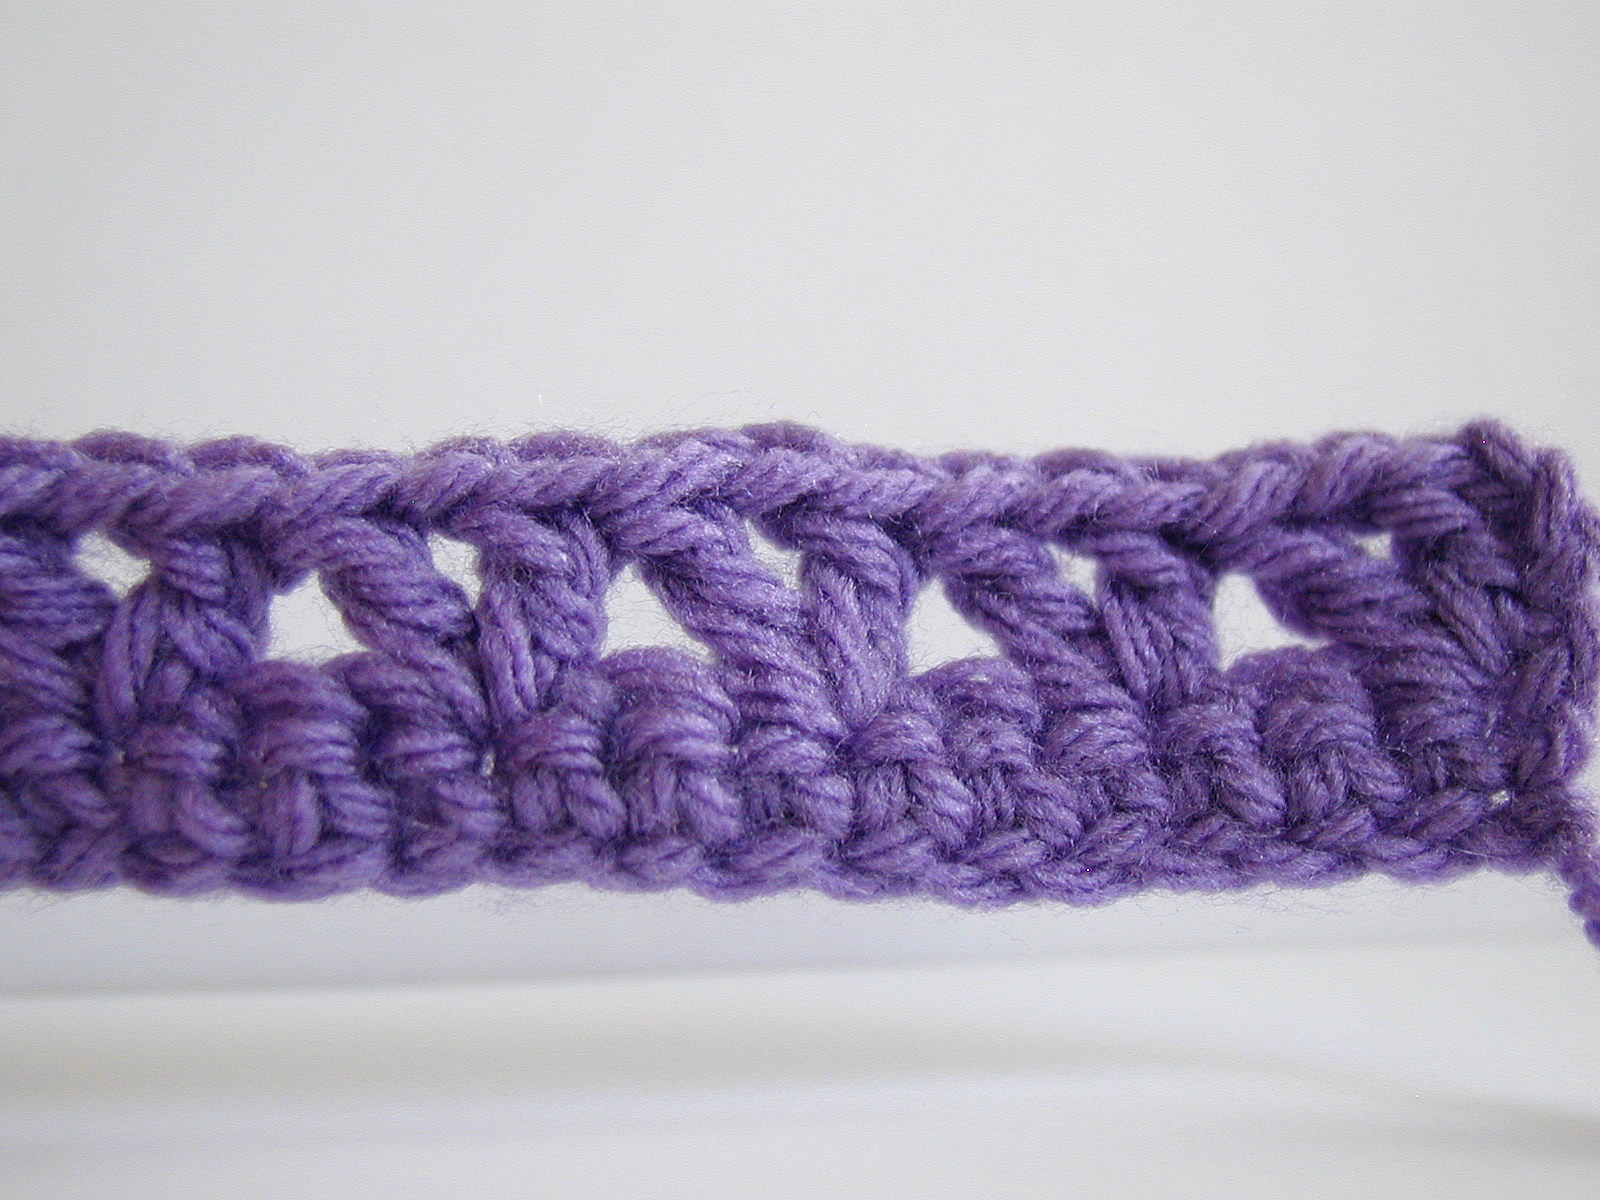 Crochet Spot » Blog Archive » How to Crochet: V-Stitch - Crochet